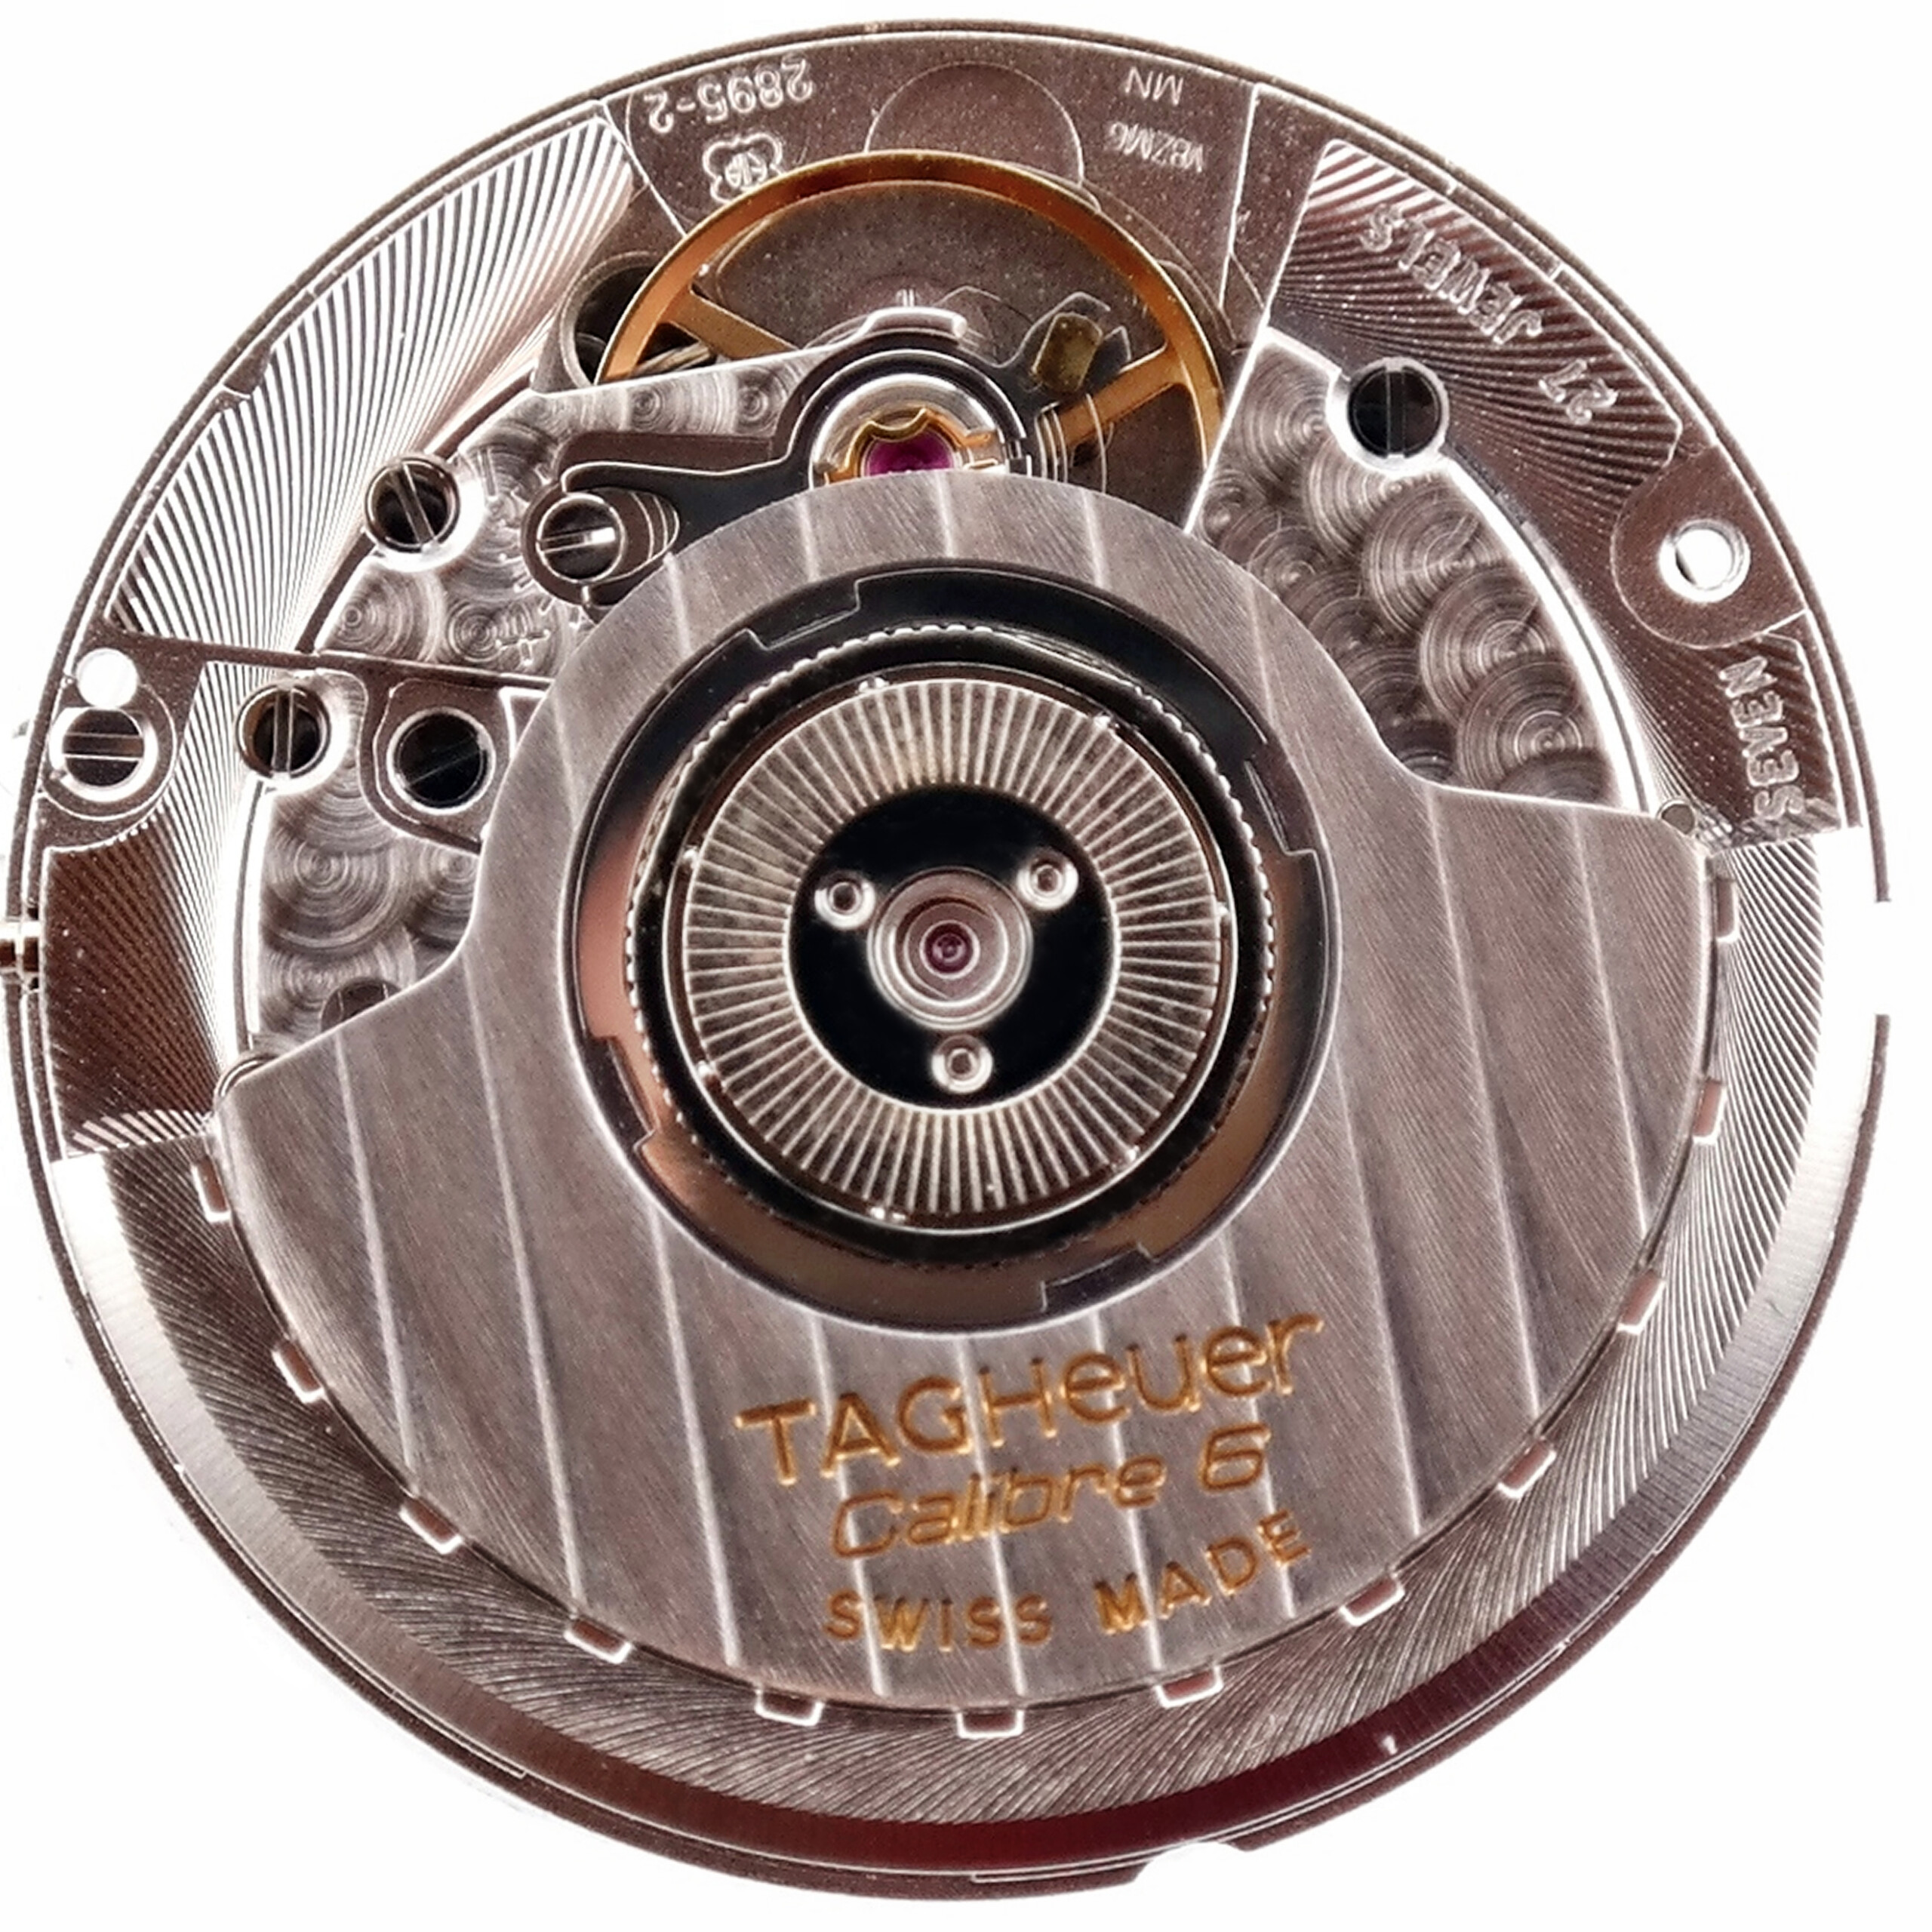 TAG Heuer - Calibre 6 - ETA 2895-2 - Small Seconds Automatic Watch Movement